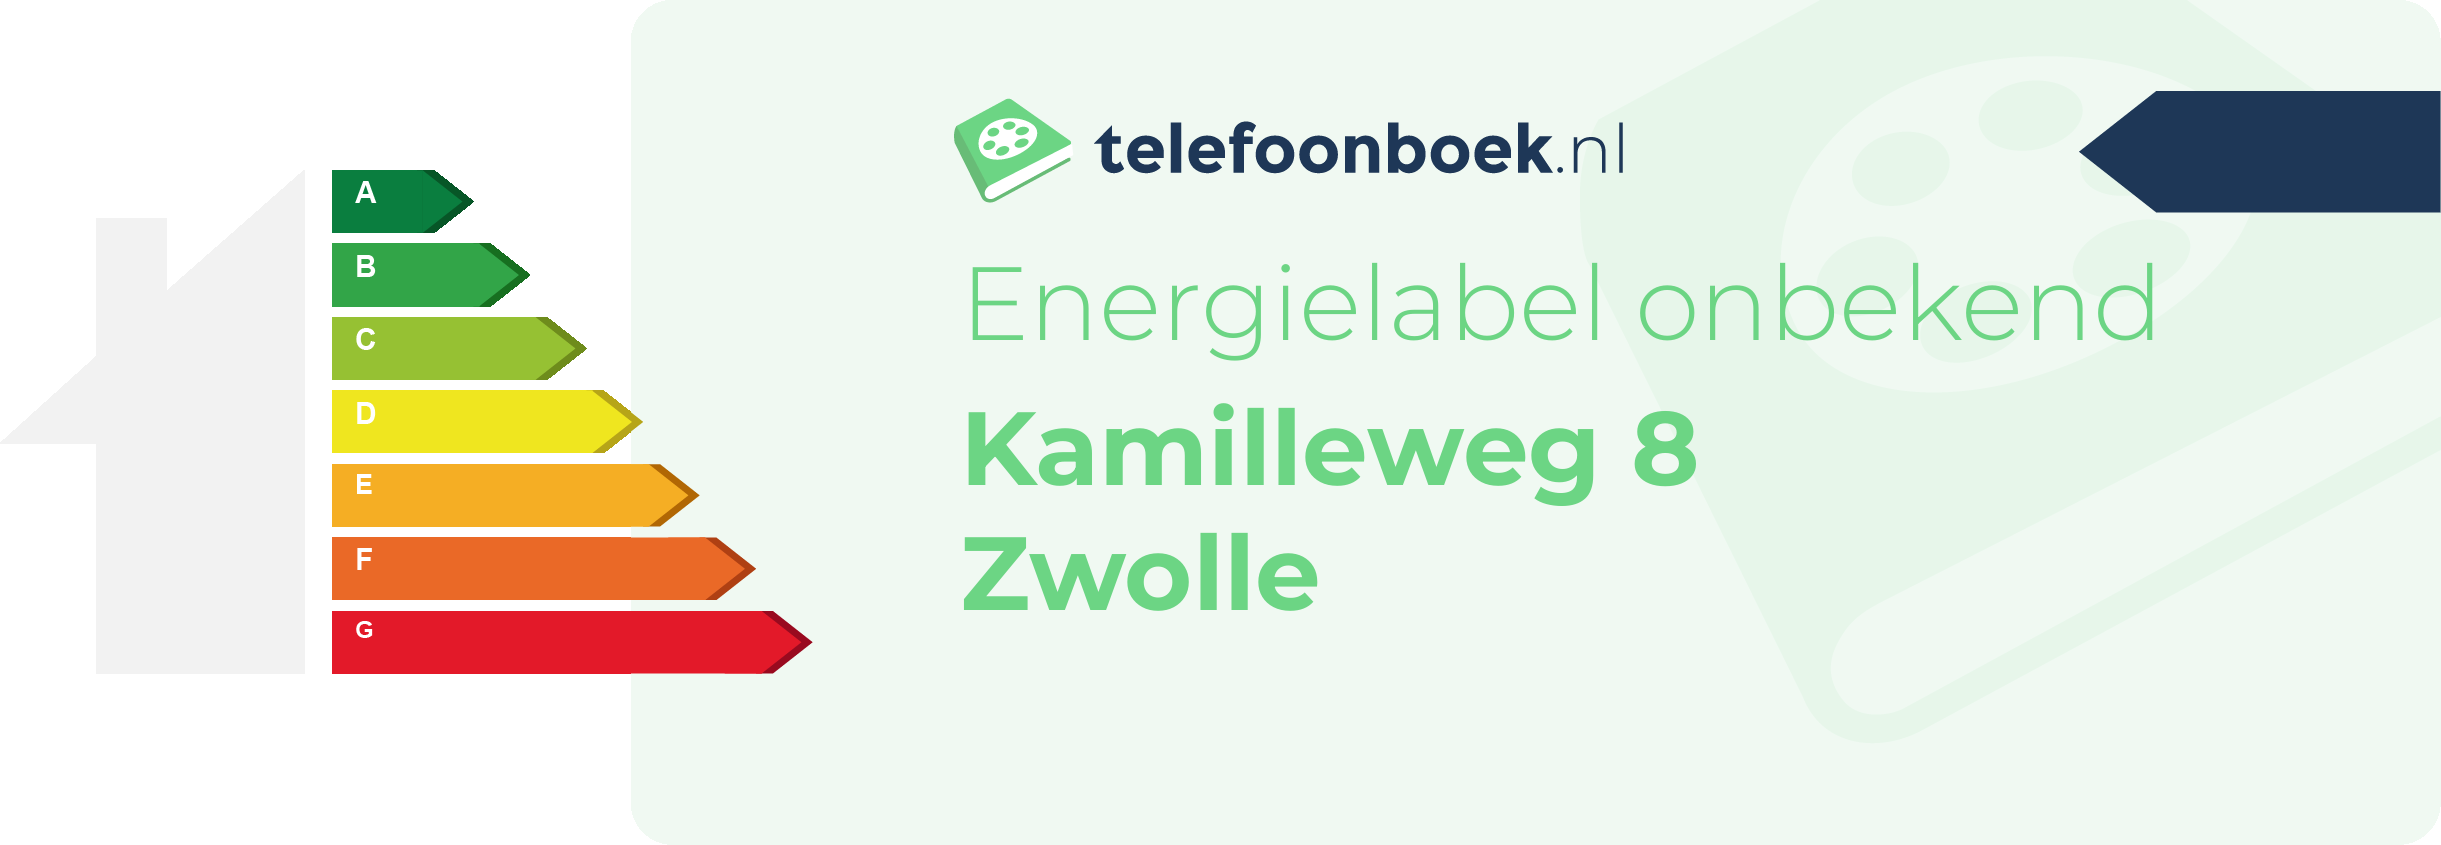 Energielabel Kamilleweg 8 Zwolle